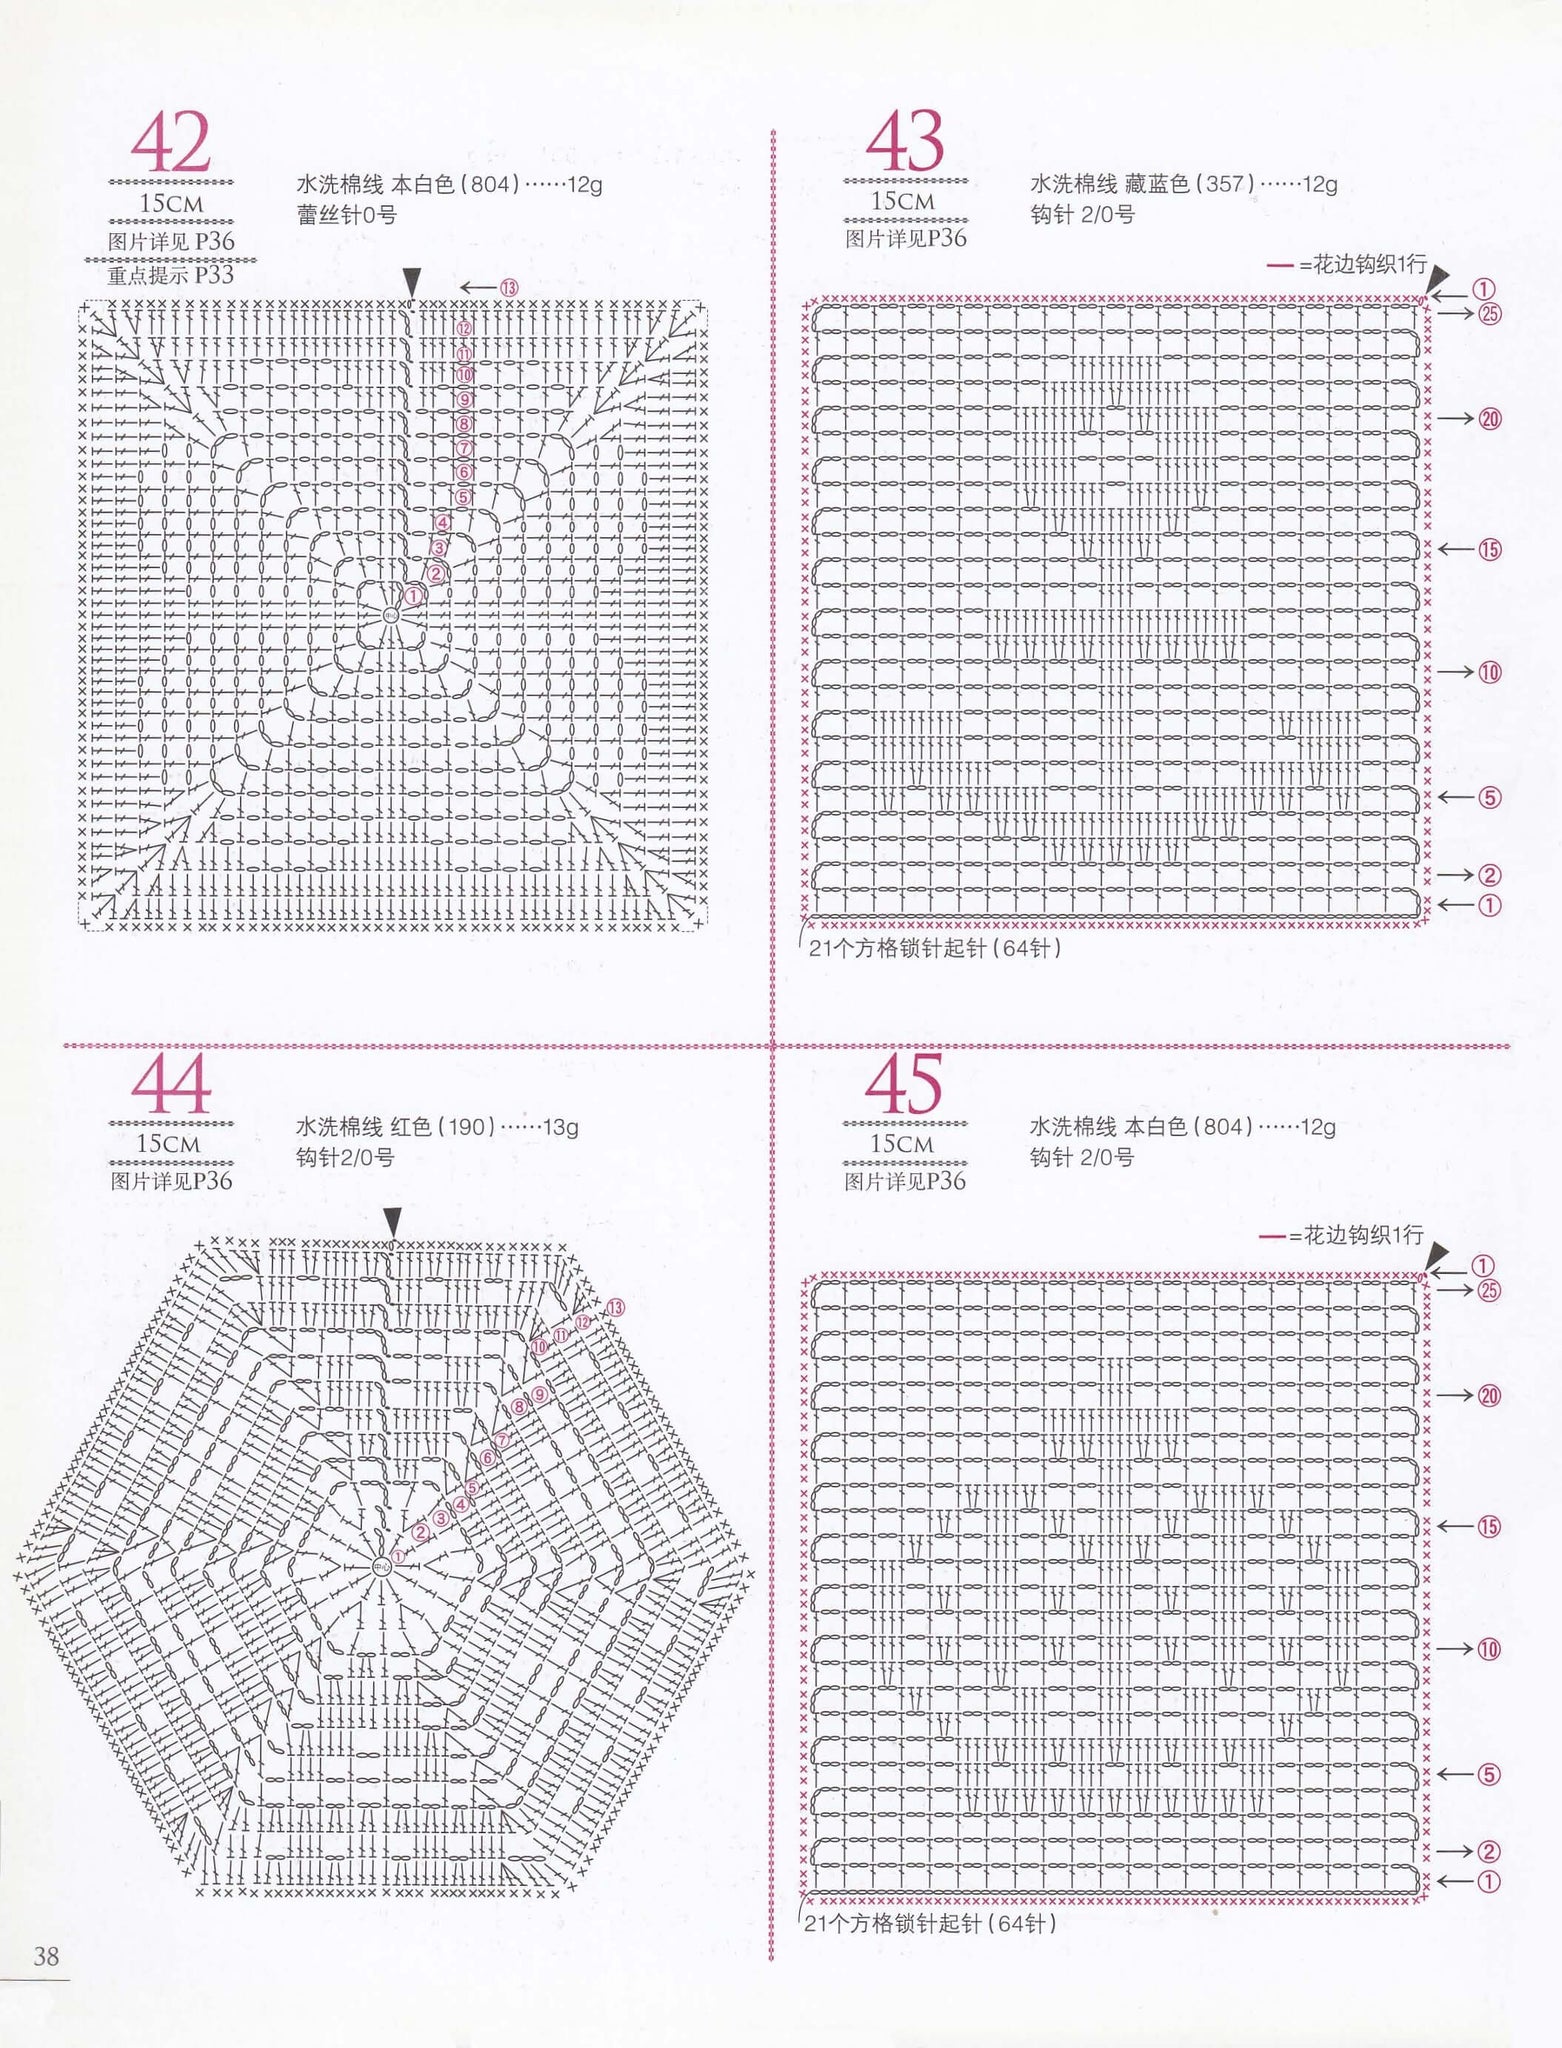 Filet crochet lace charts